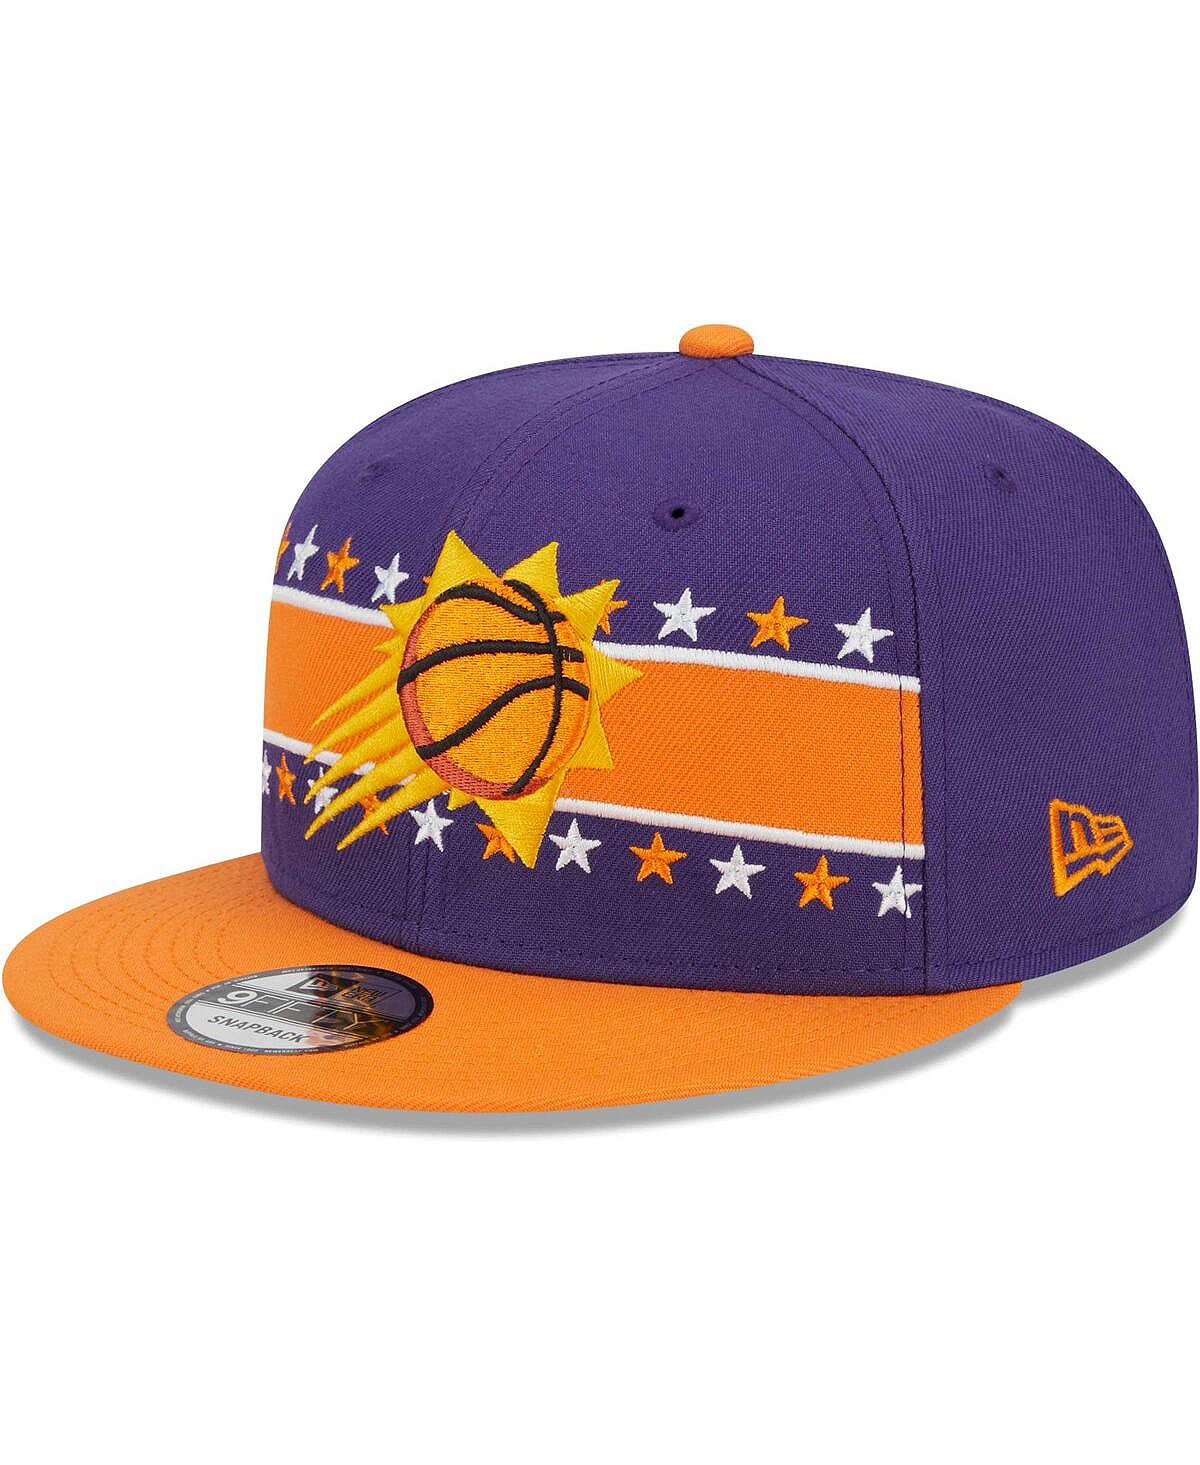 Мужская фиолетовая бейсболка Phoenix Suns со звездами 9FIFTY Snapback New Era